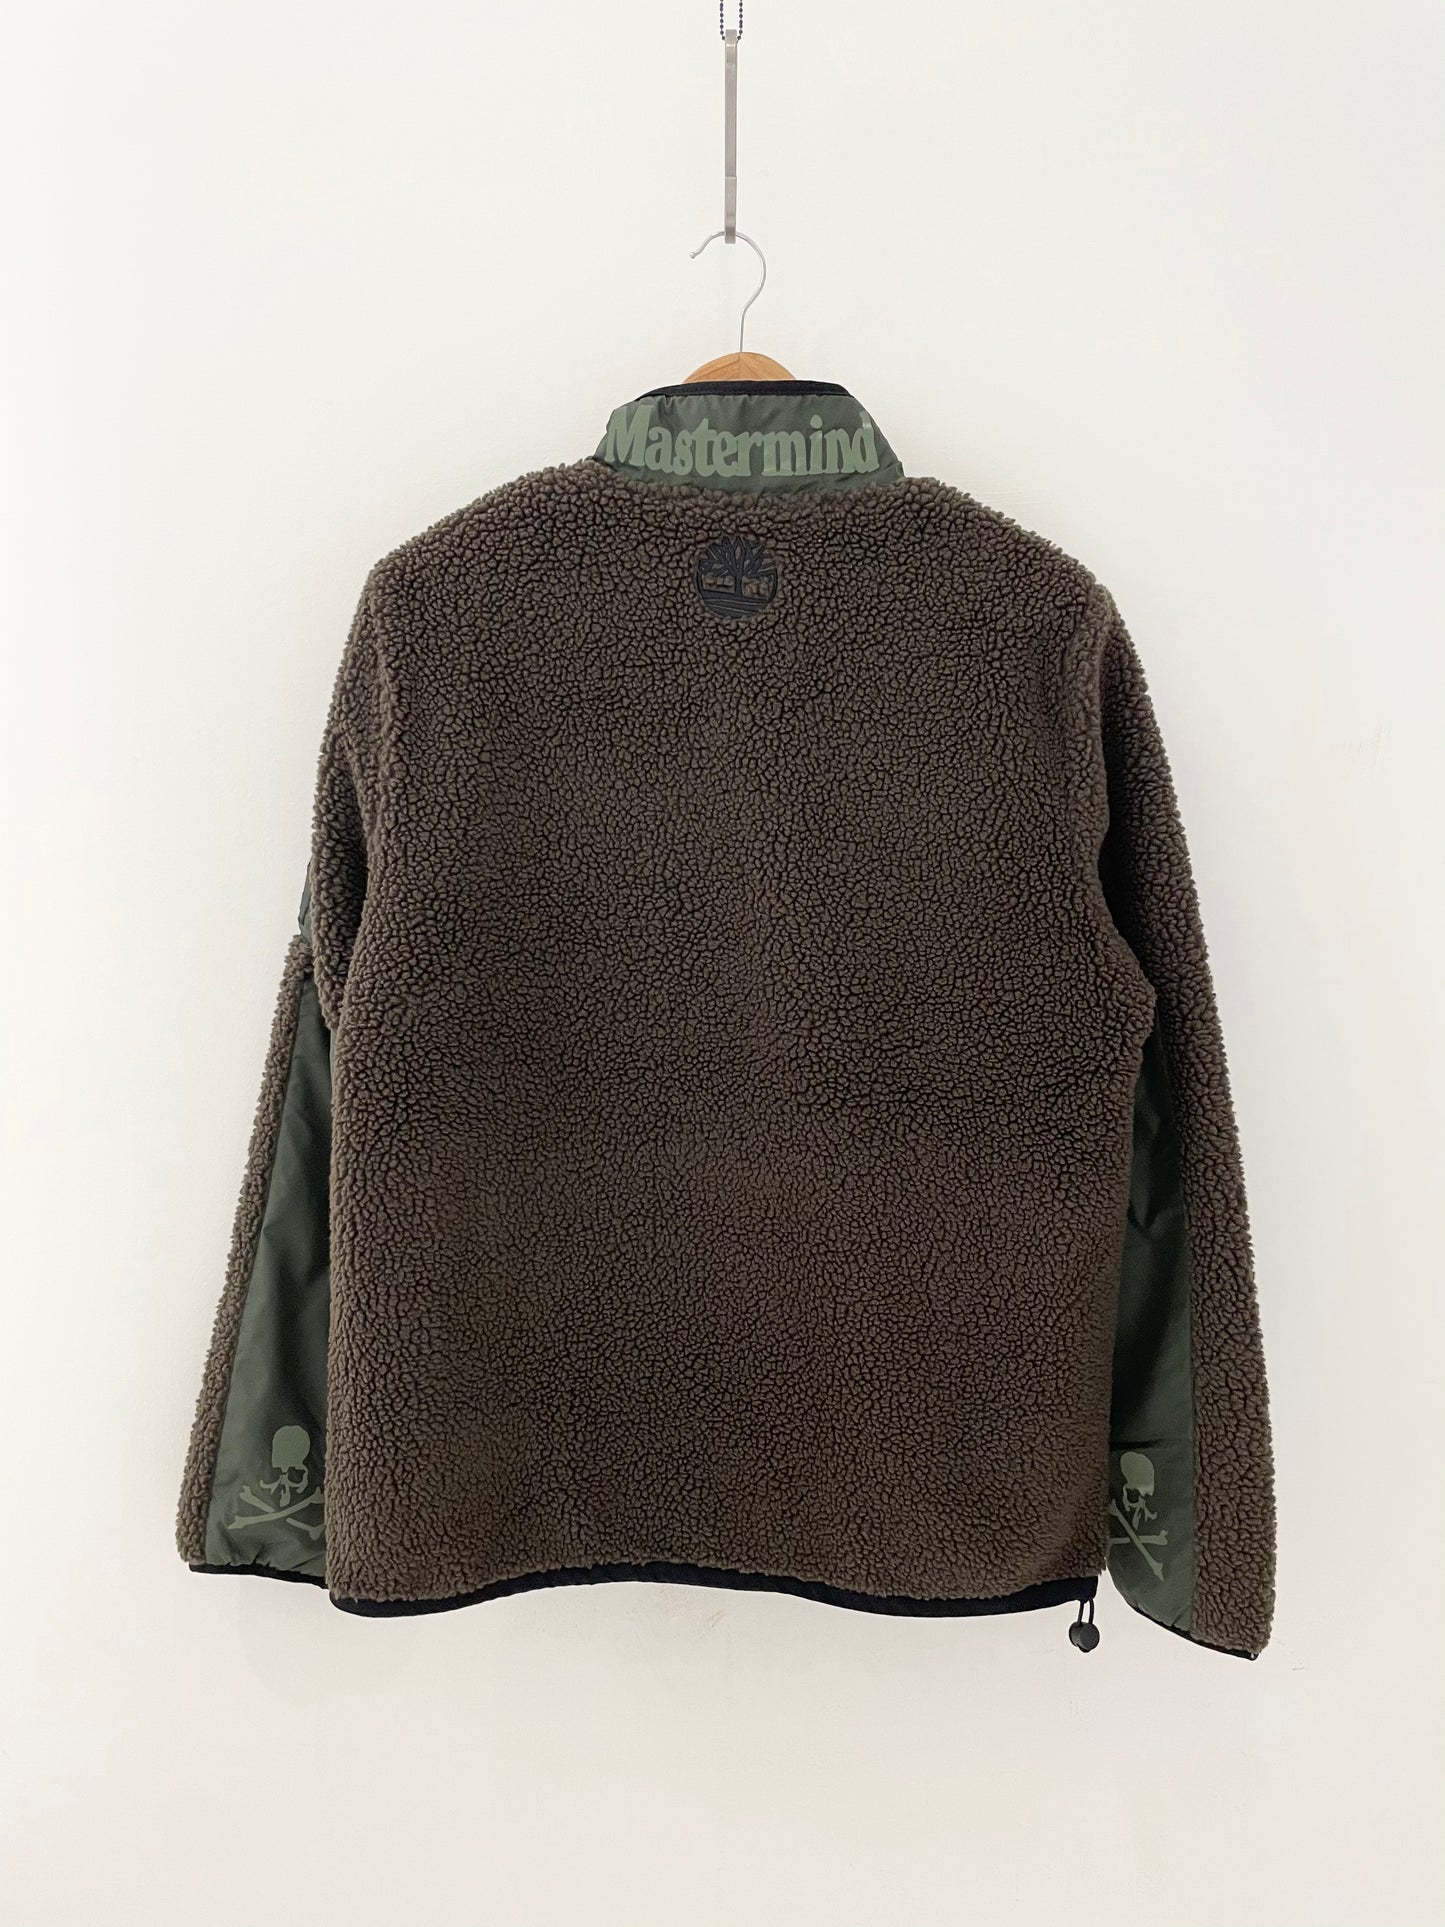 Timberland X Mastermind Fleece Jacket